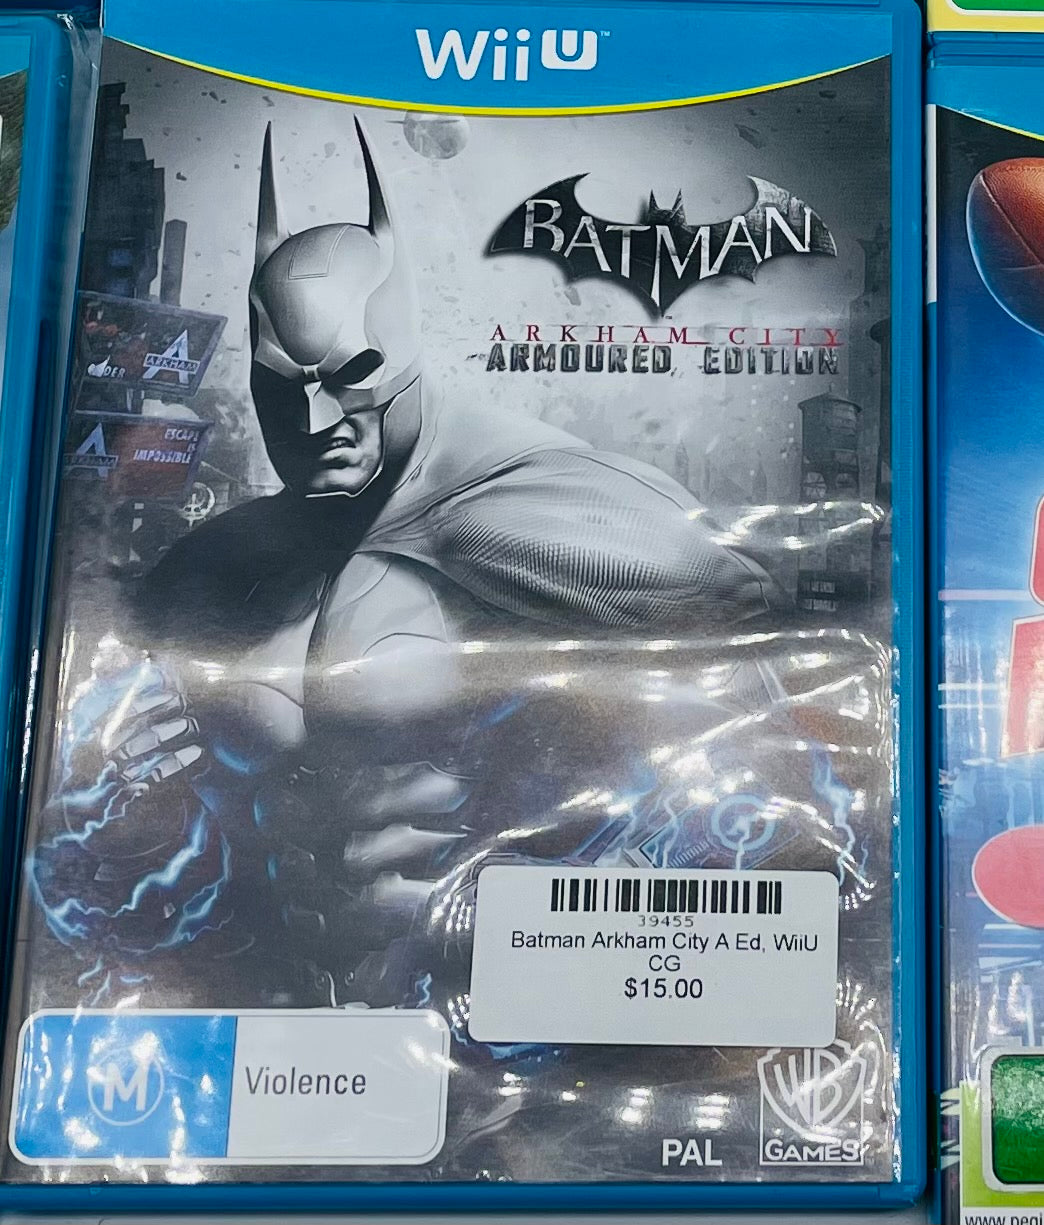 Batman Arkham City Armoured Edition game on Nintendo Wii U – Market Fair